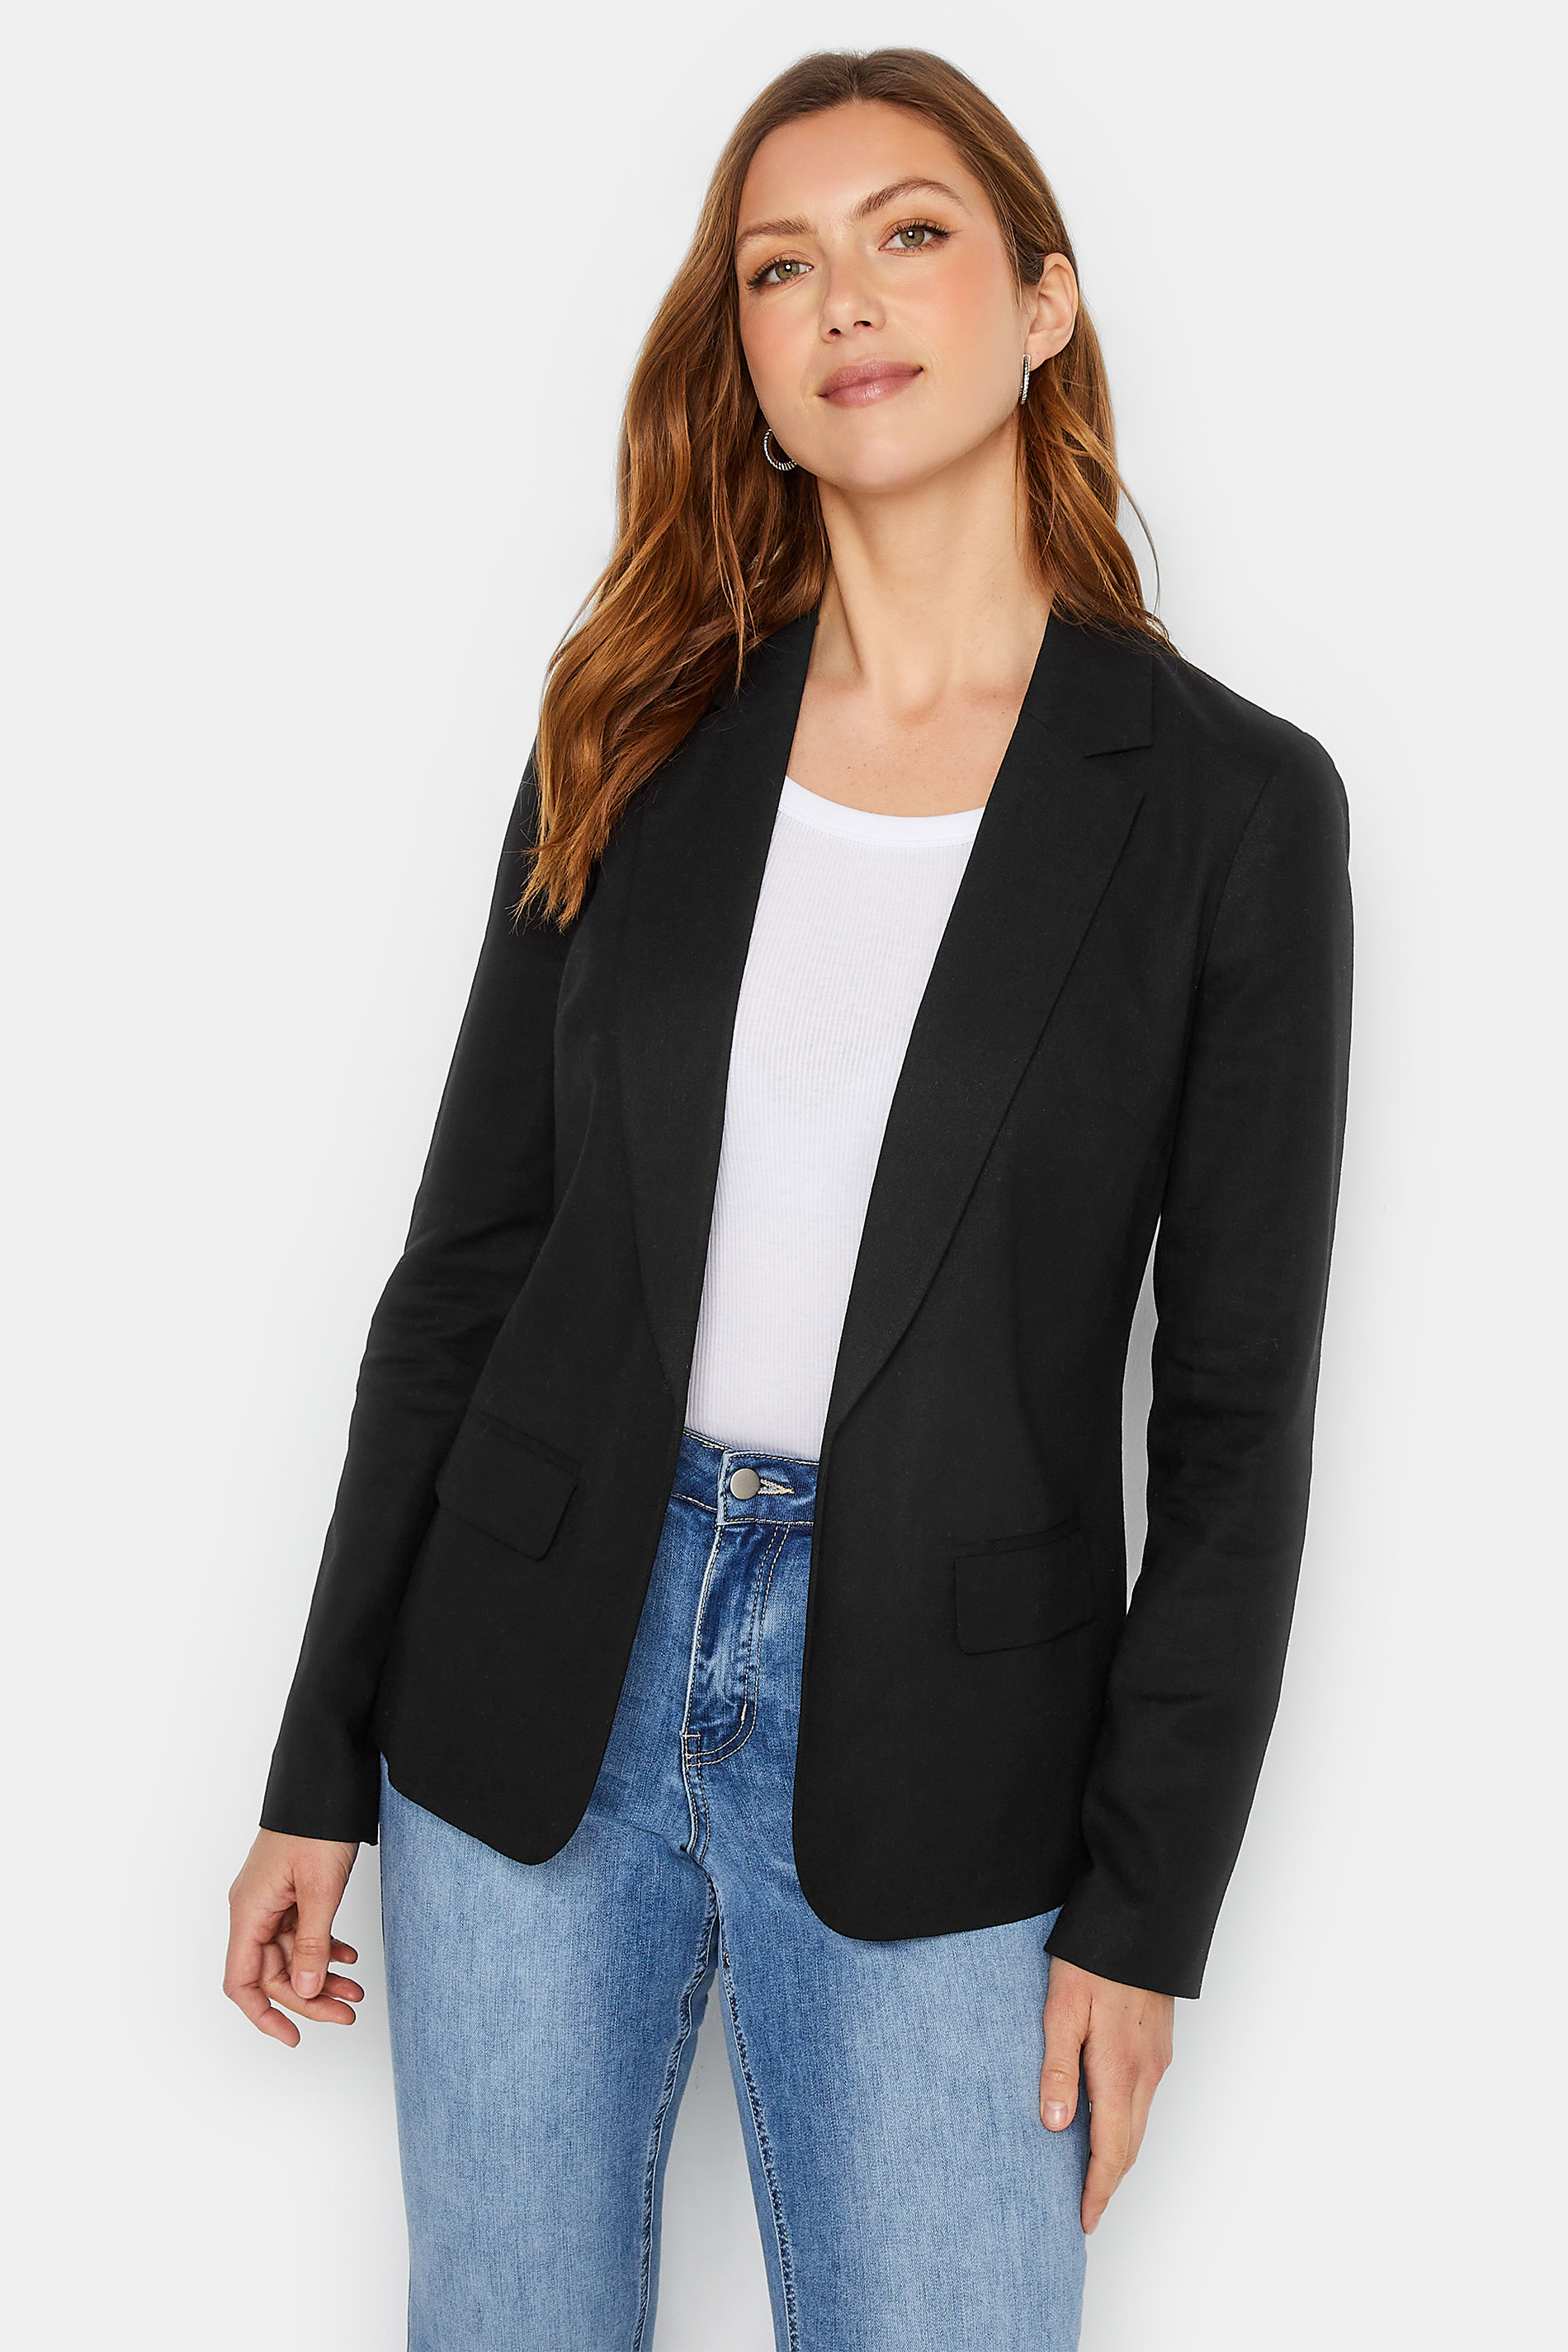 LTS Tall Black Linen Blazer Jacket | Long Tall Sally  1